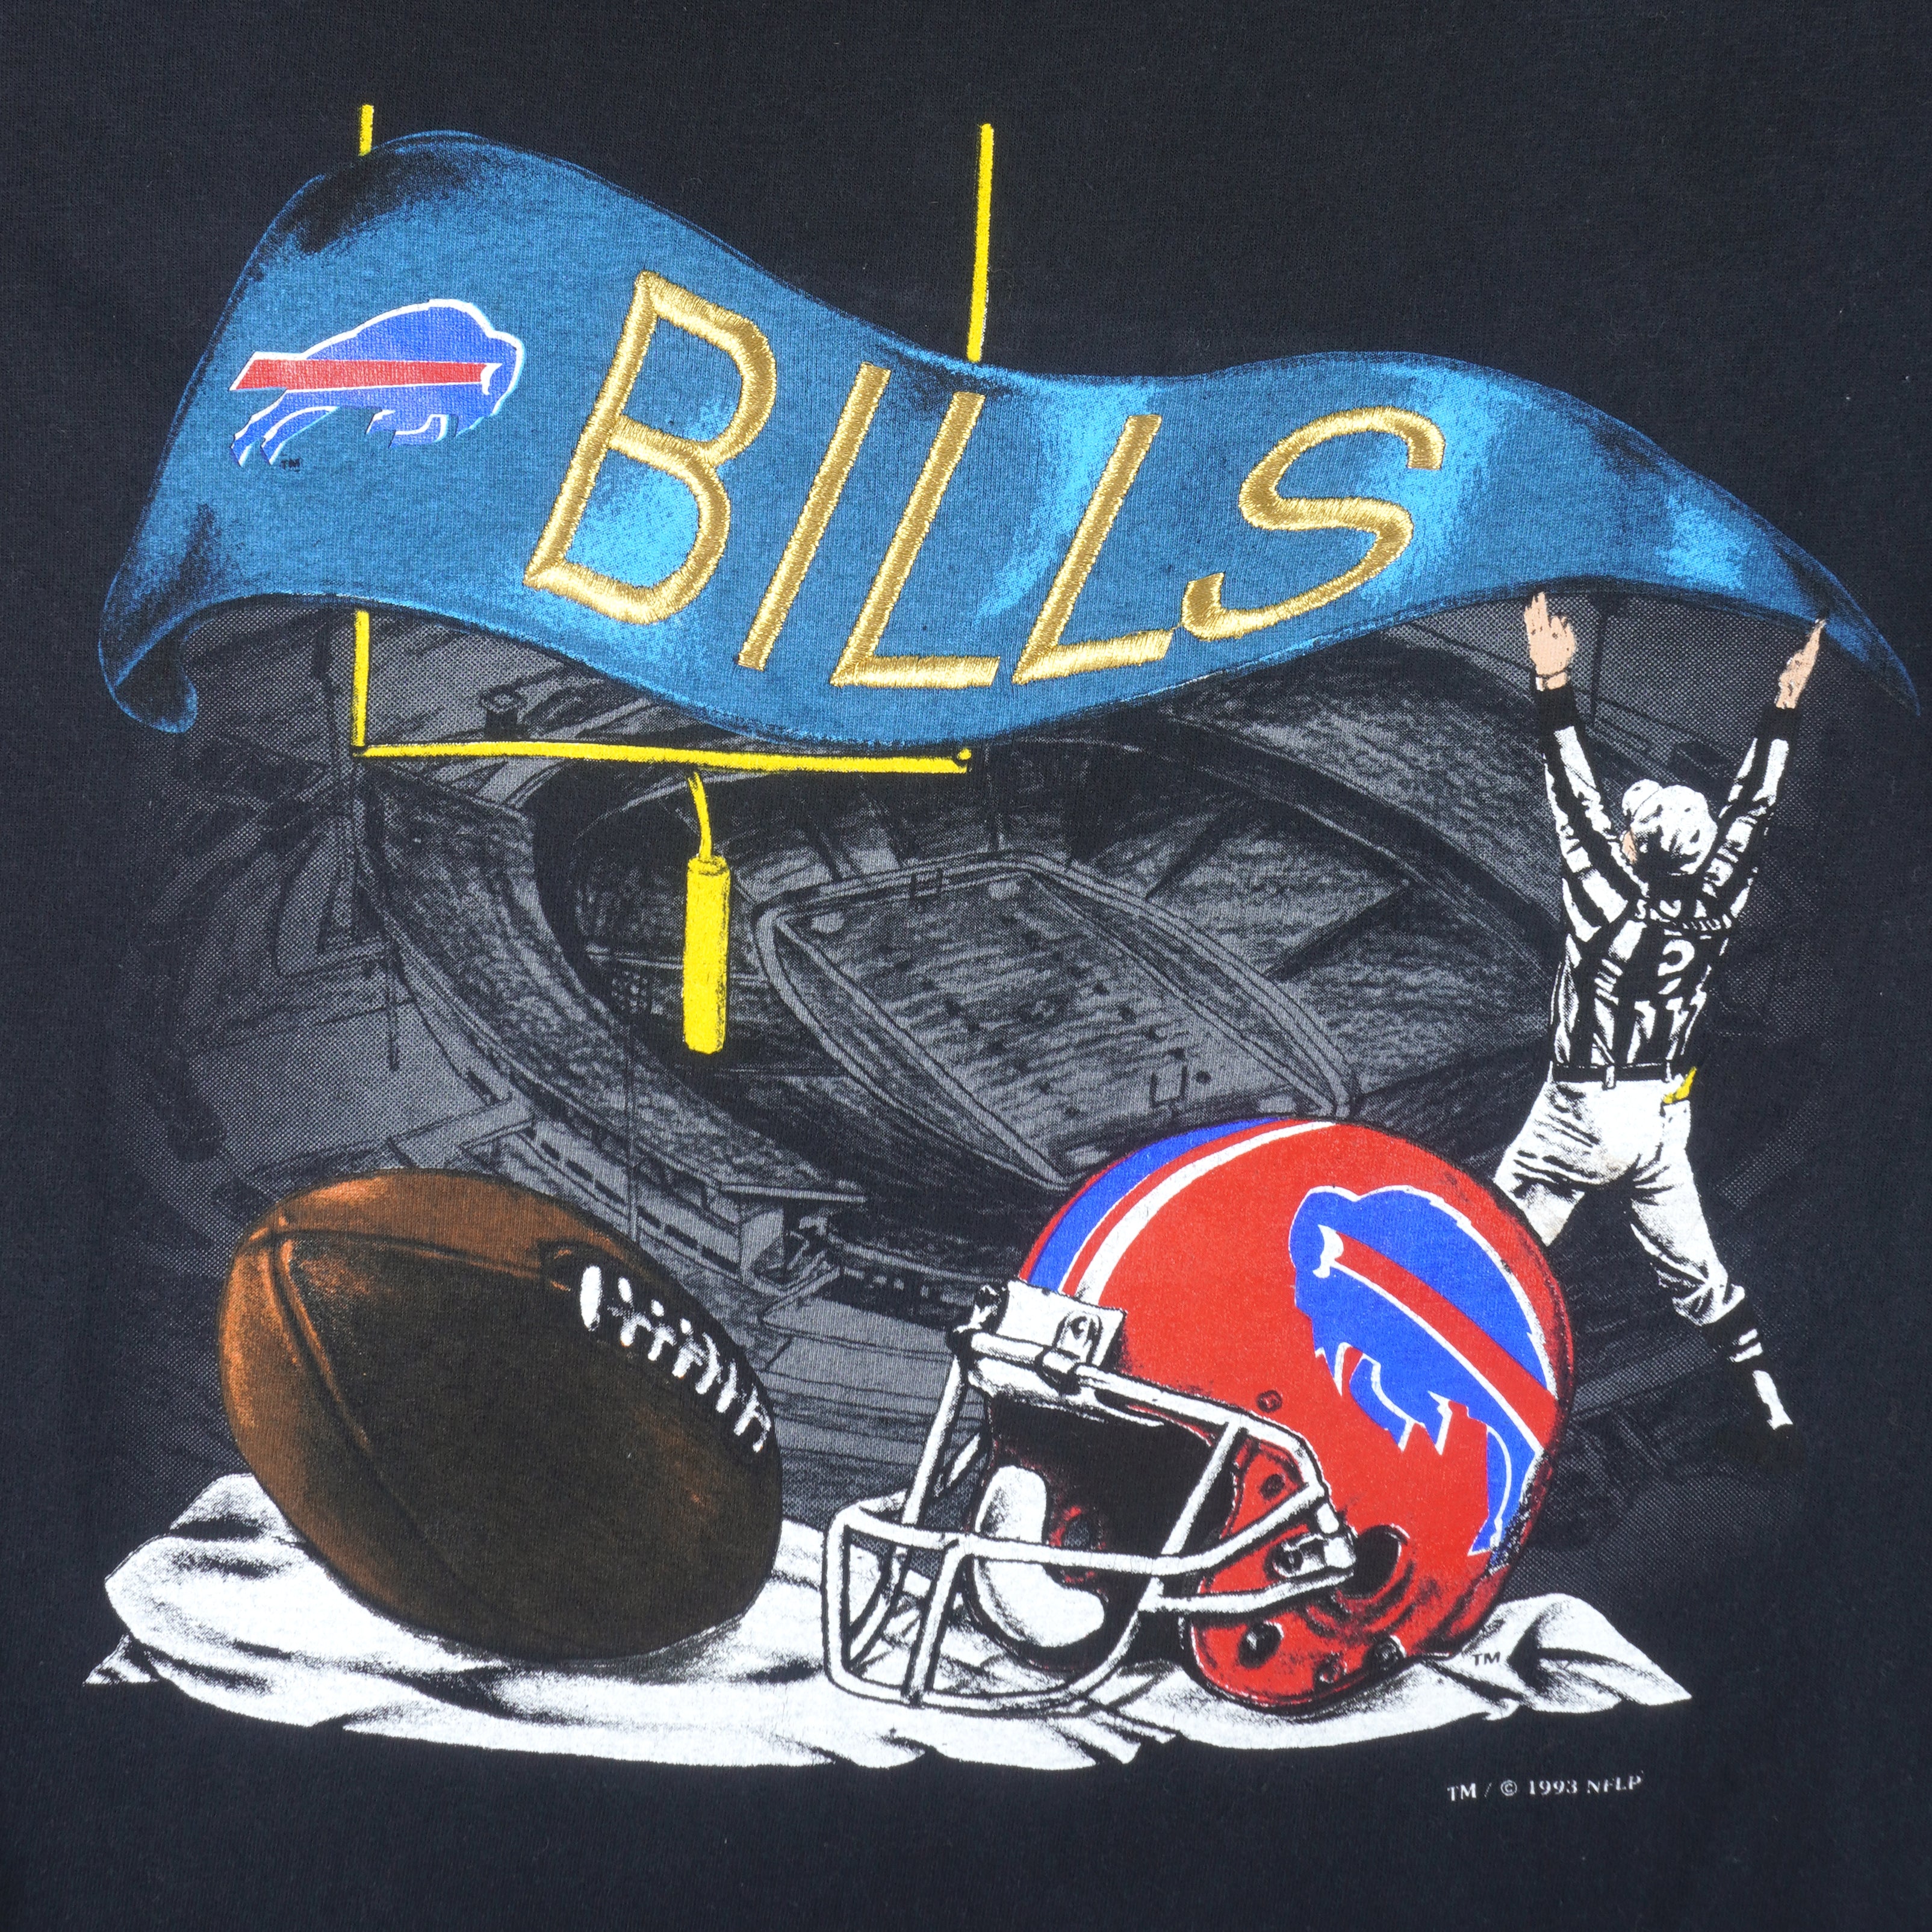 buffalo bills flag vintage